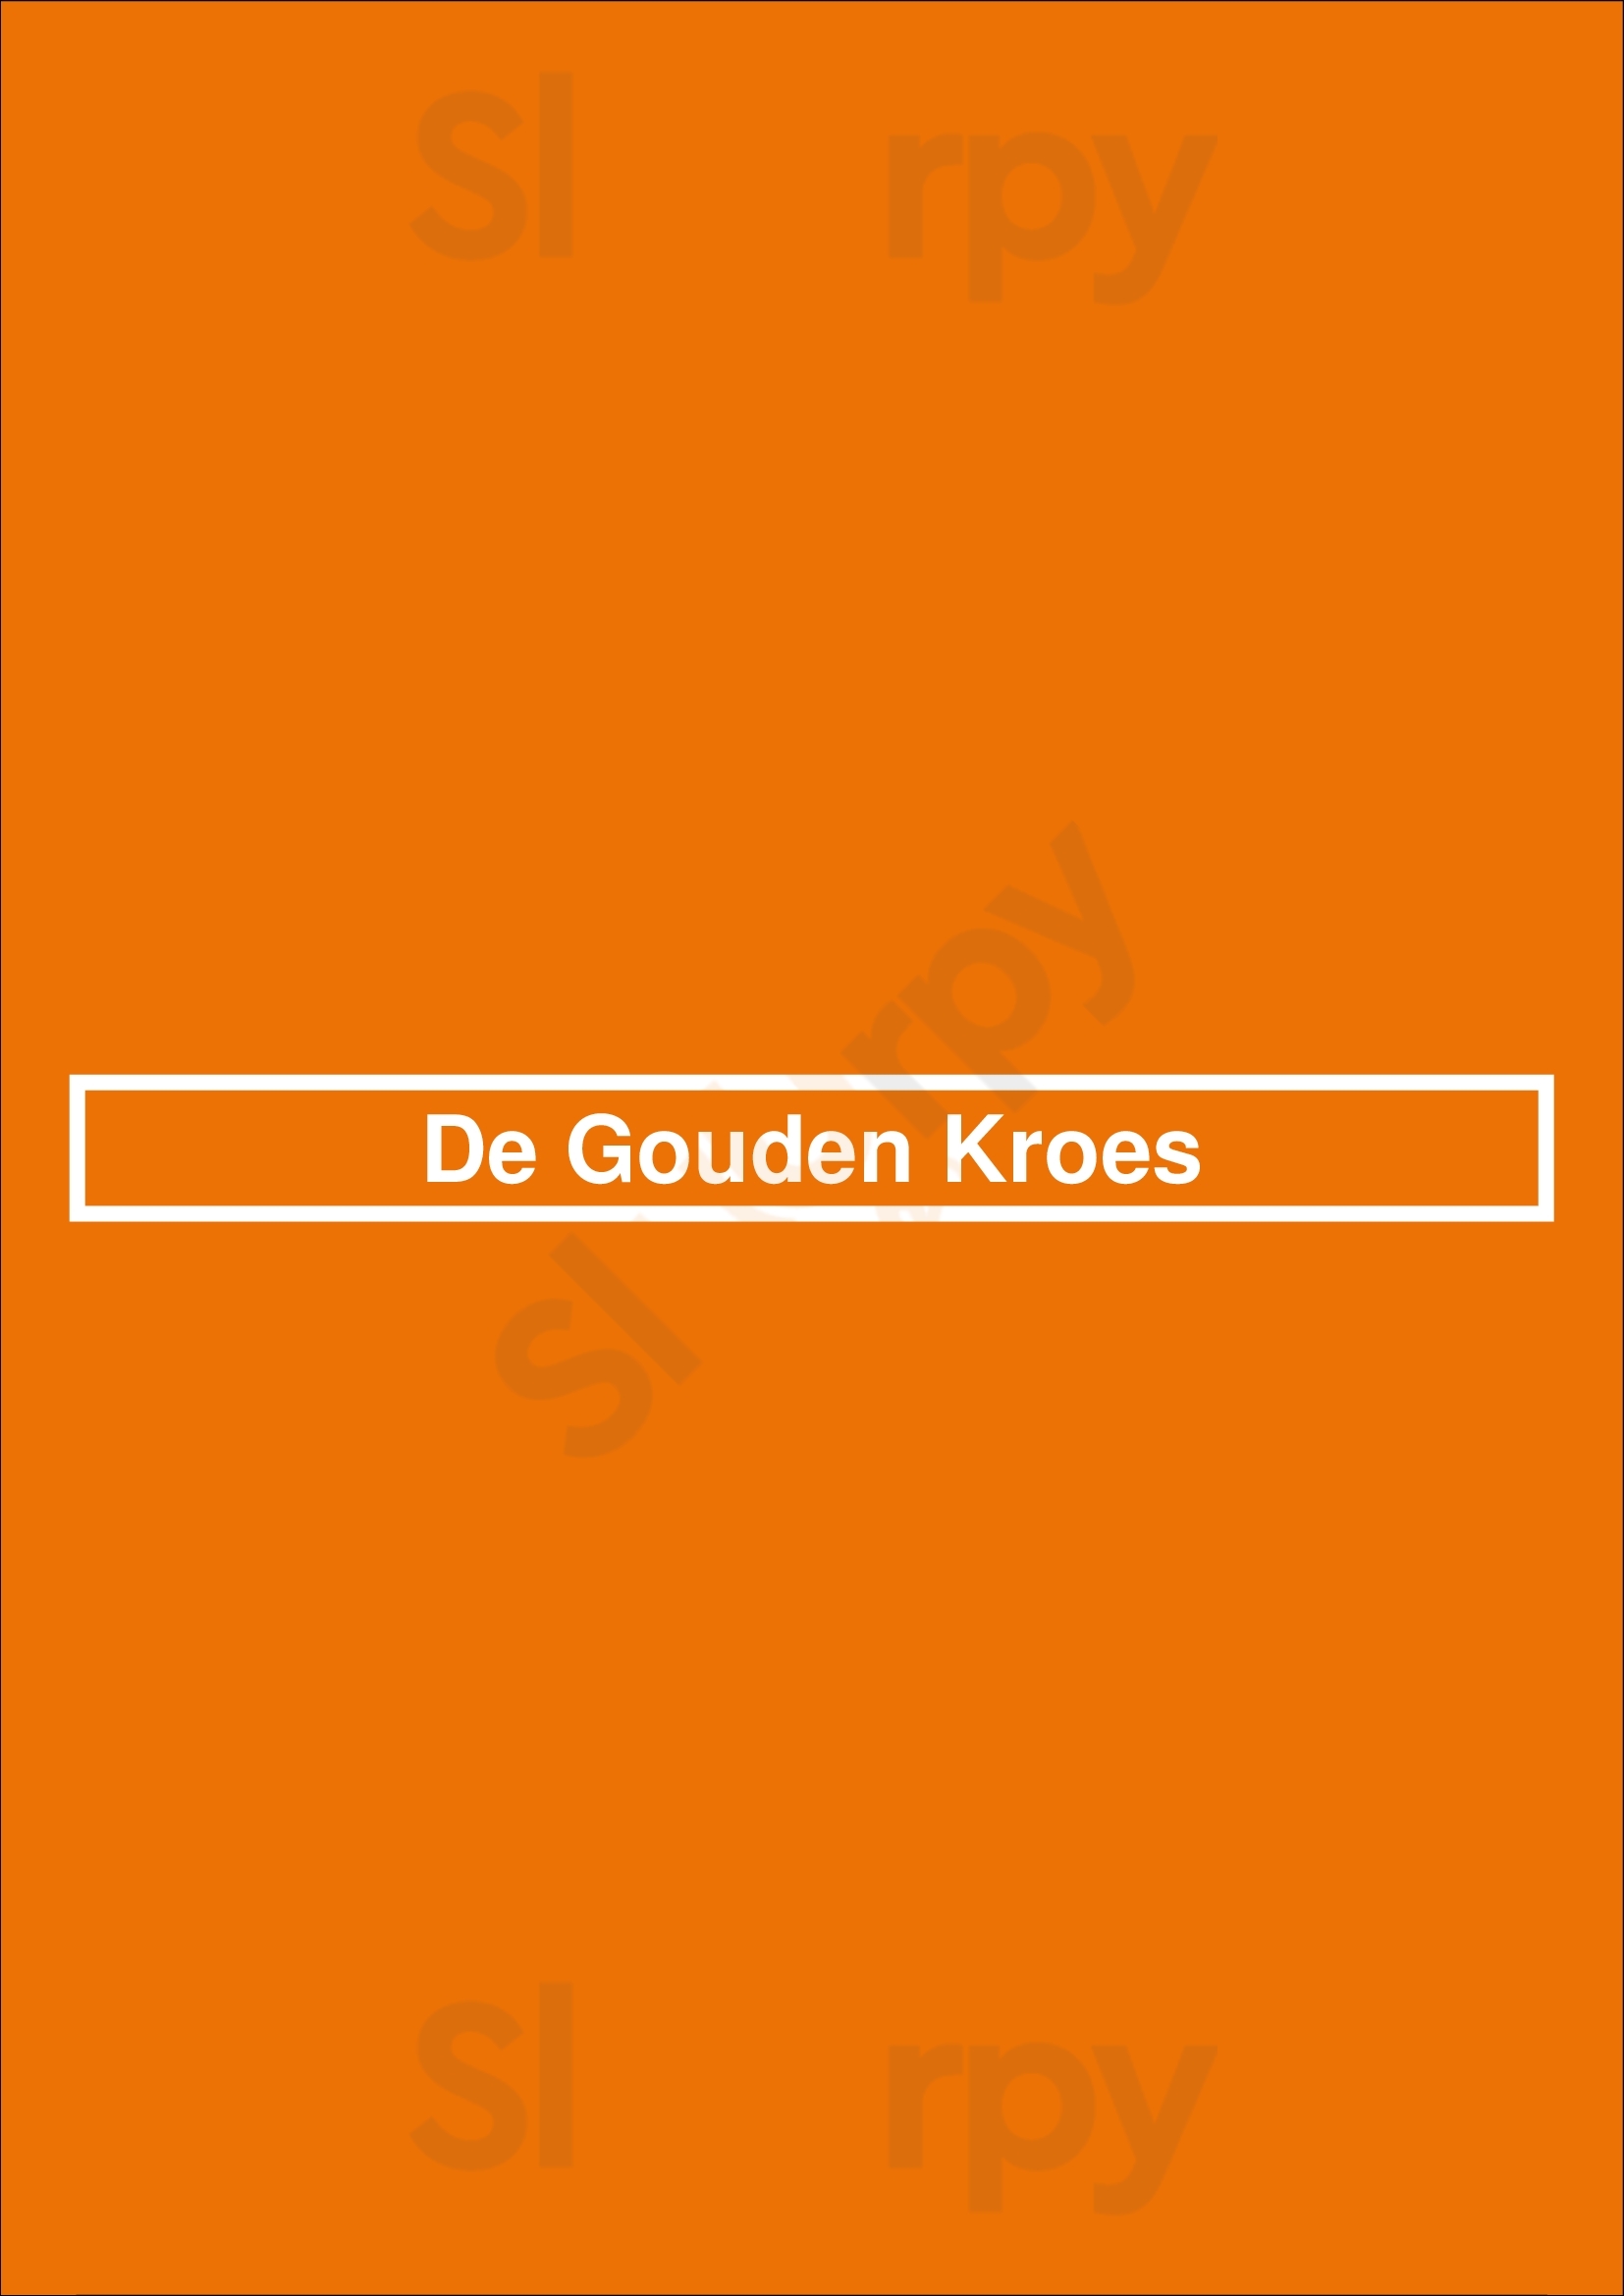 De Gouden Kroes Bruges Menu - 1